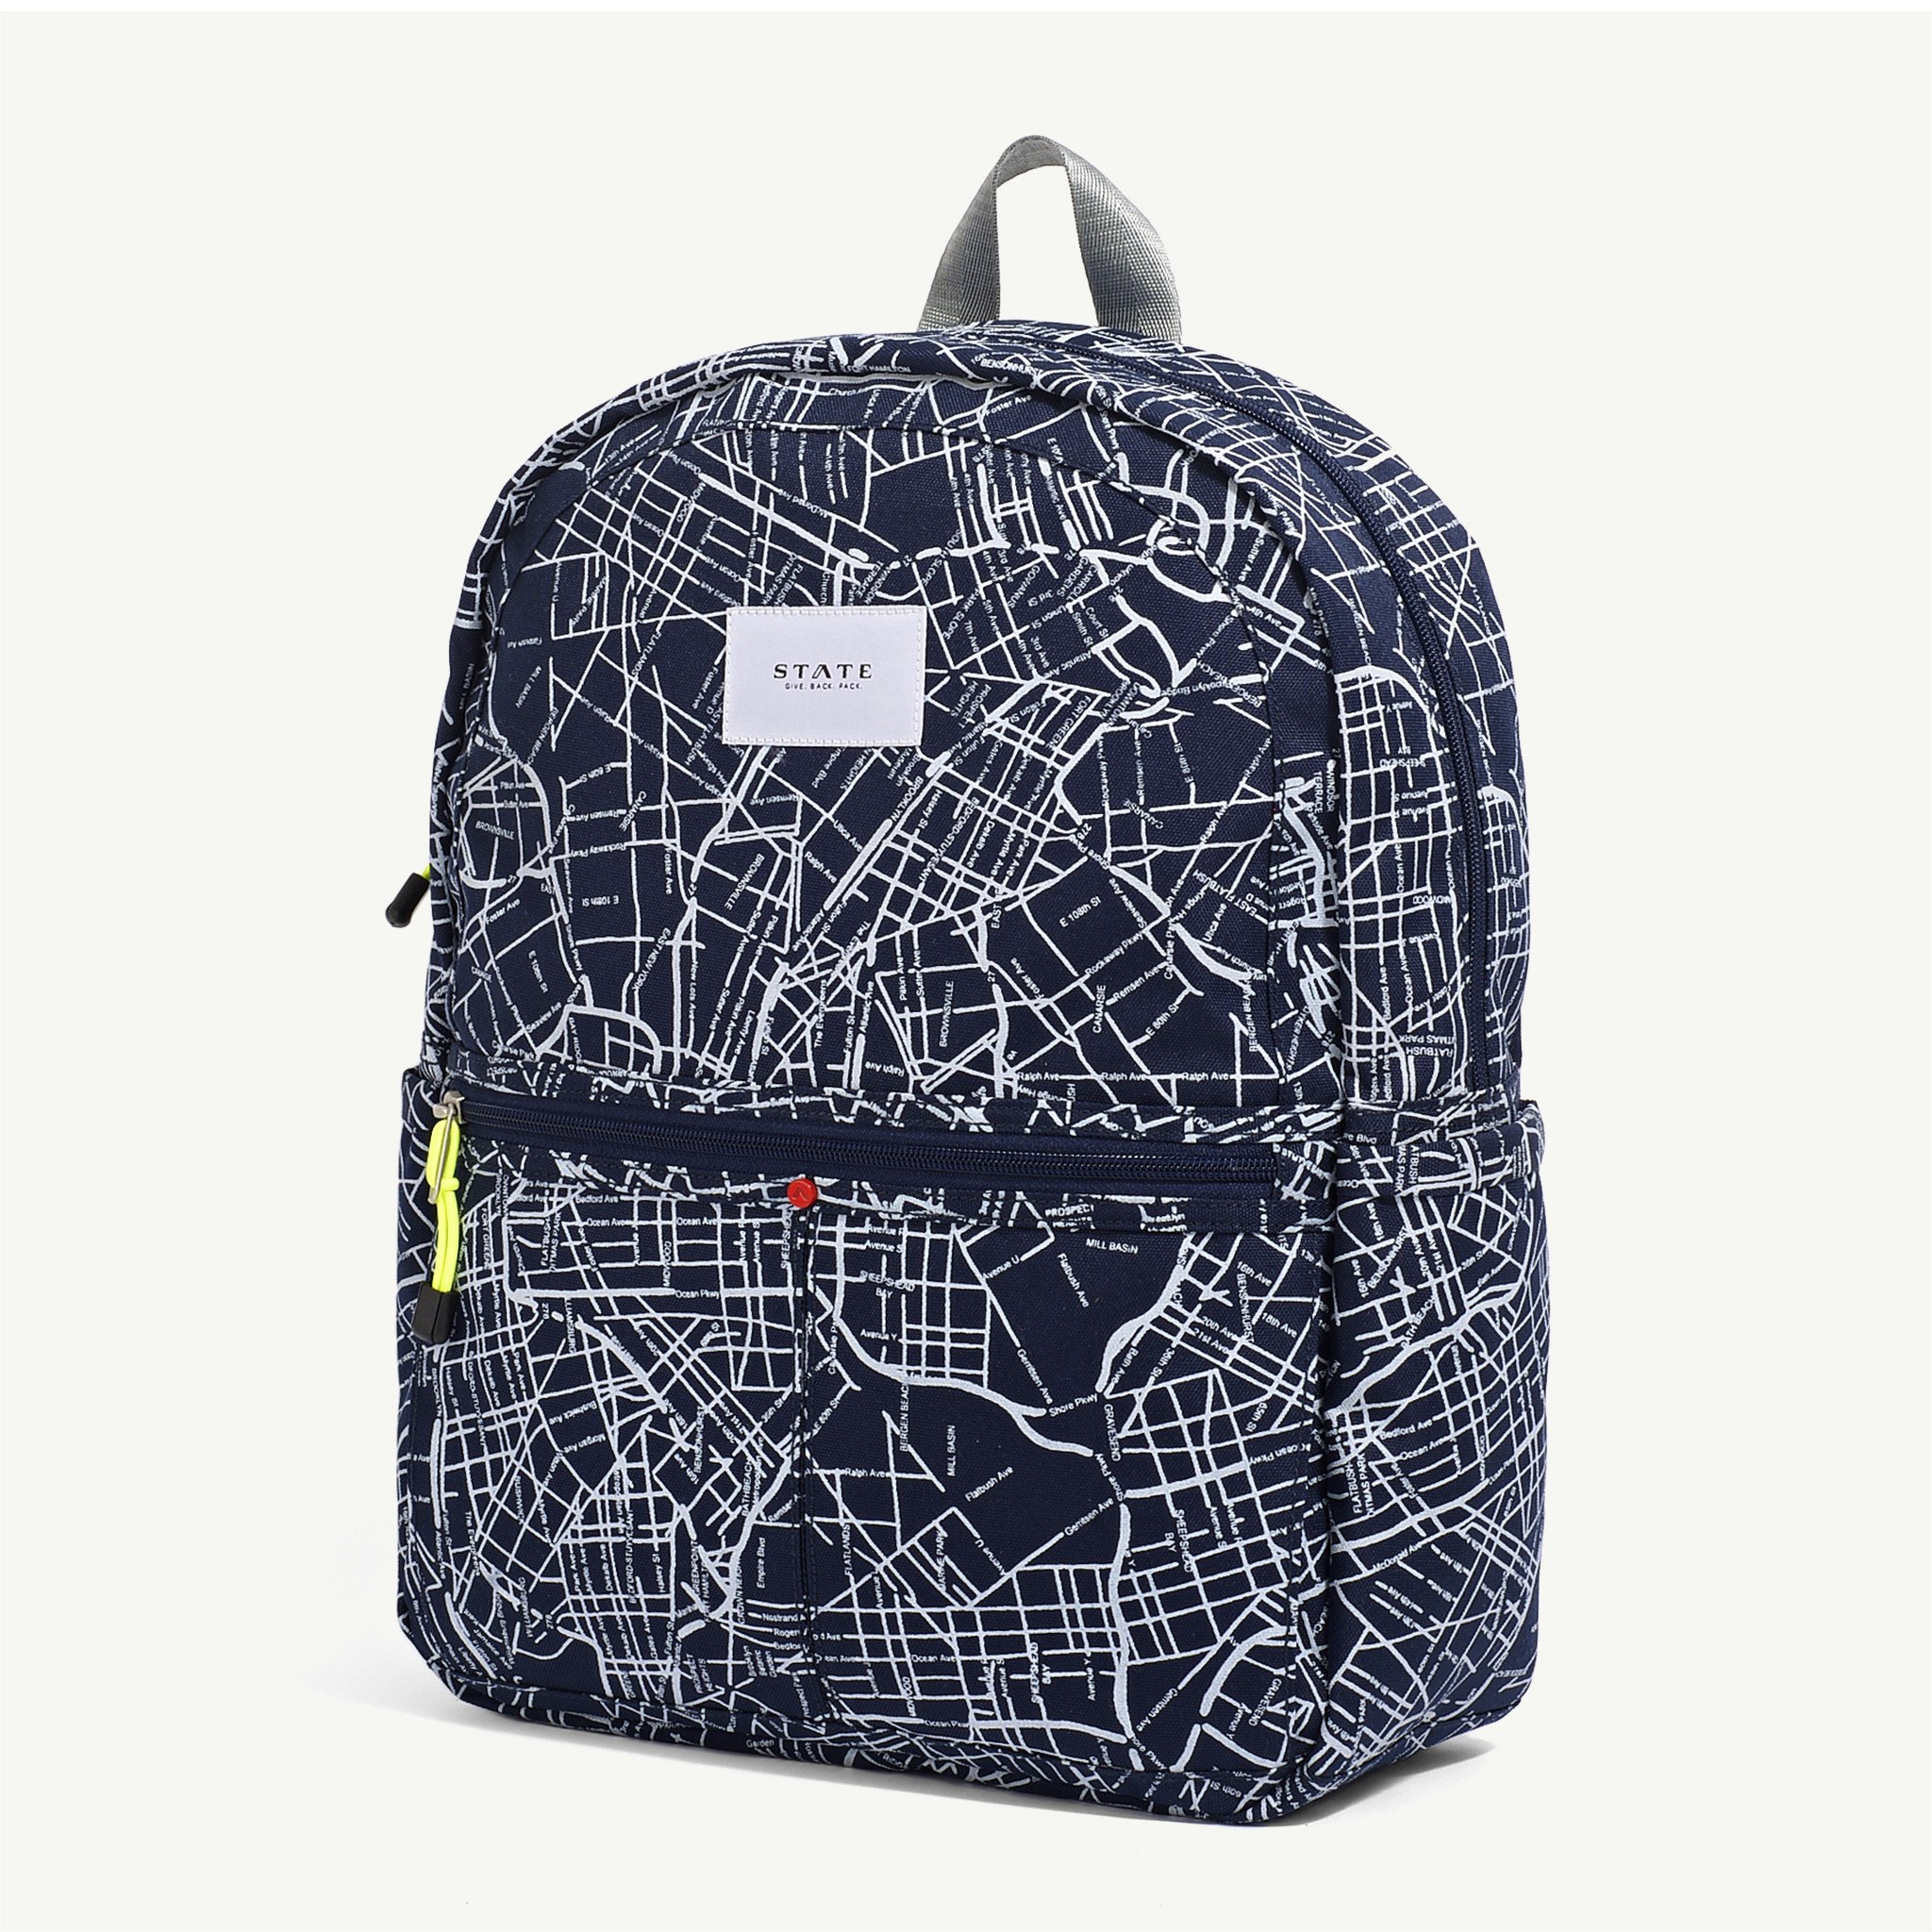 State Kane backpack